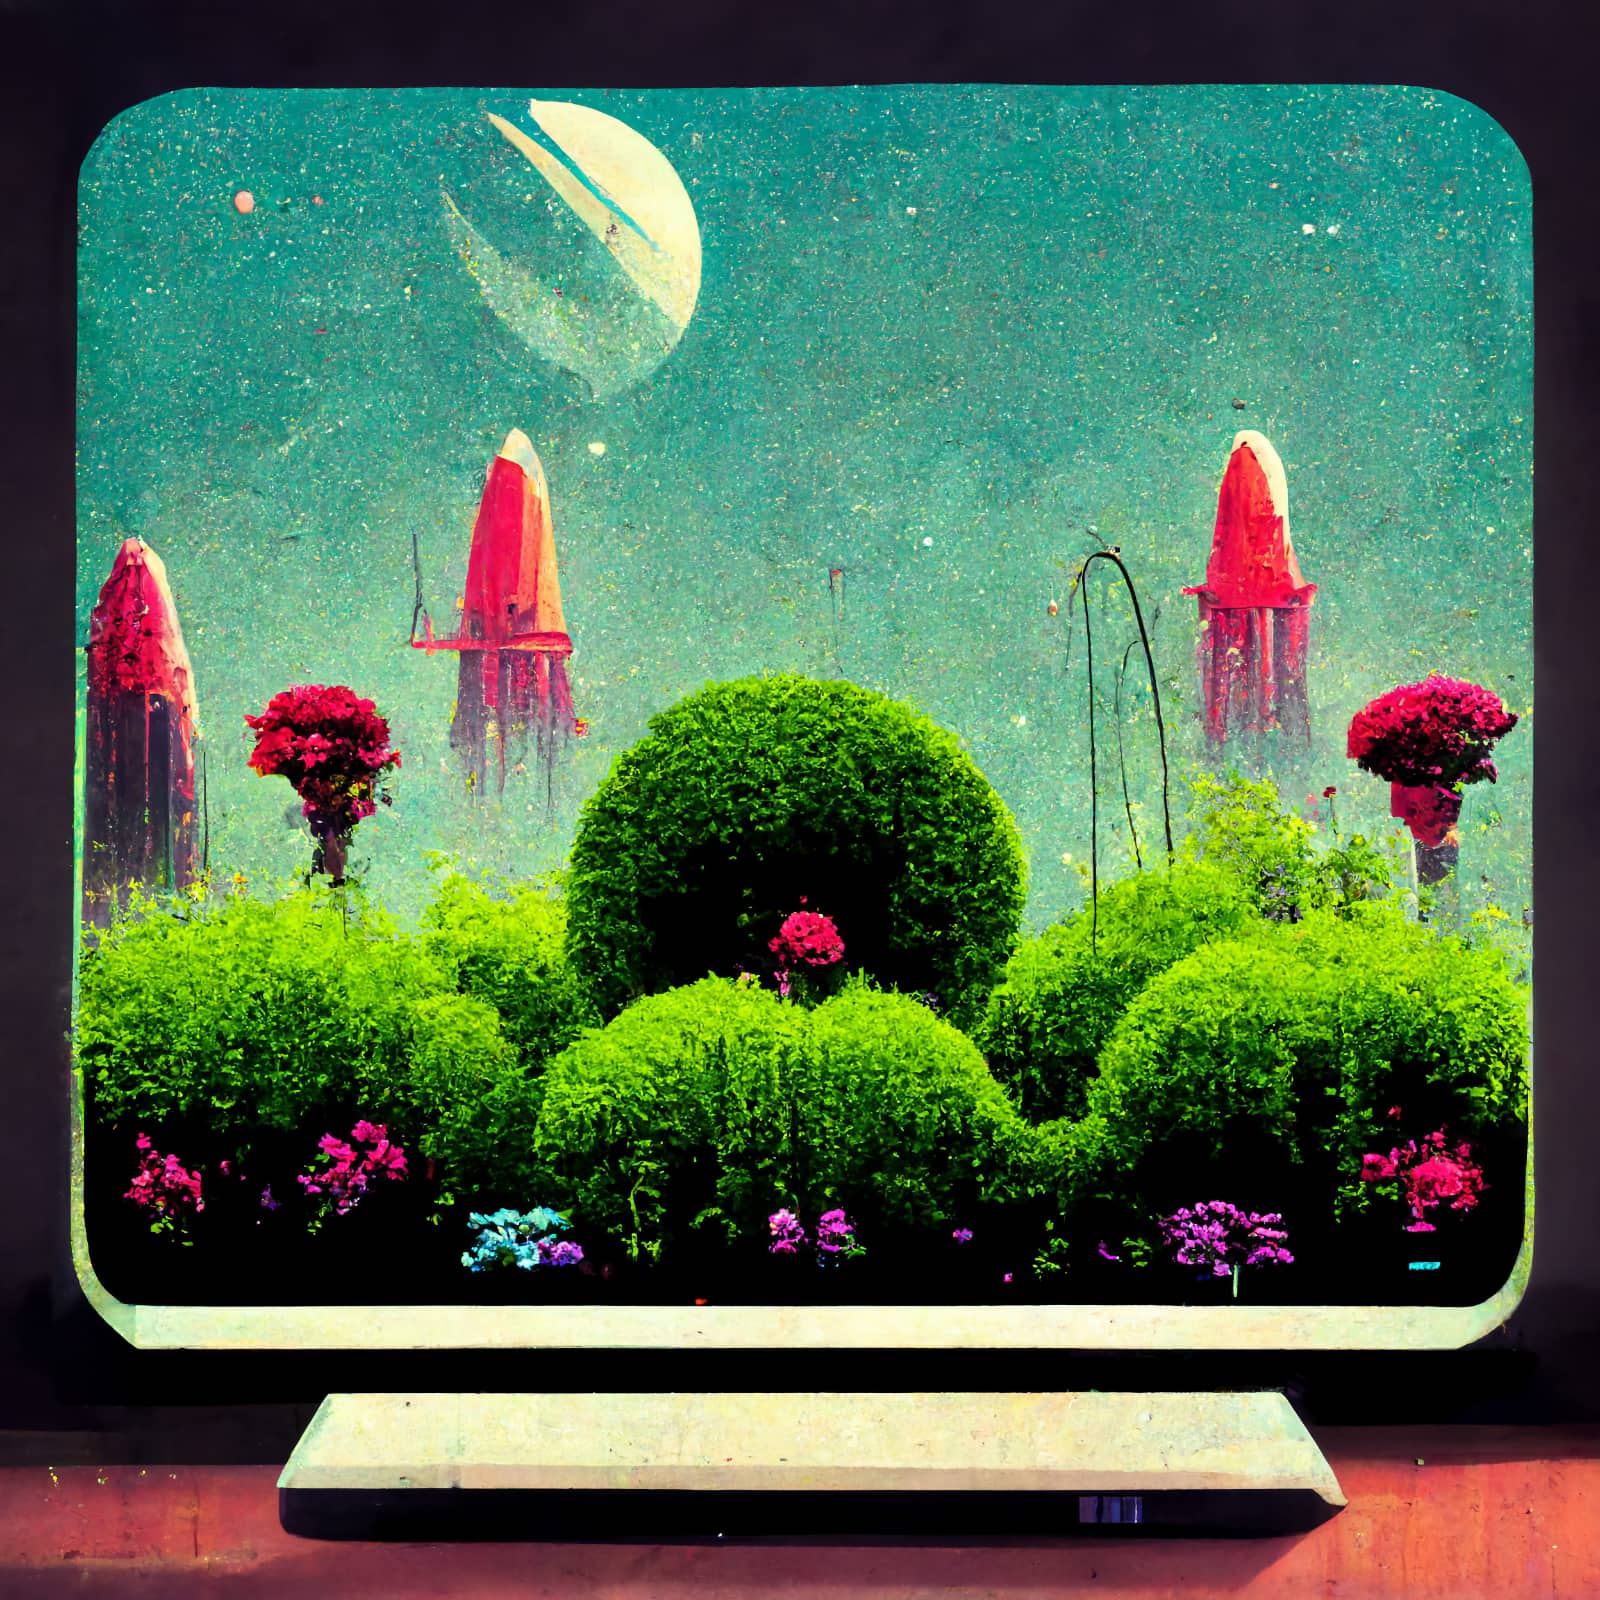 A computer monitor in a retrofuturistic style. Inside the monitor is a lush garden.